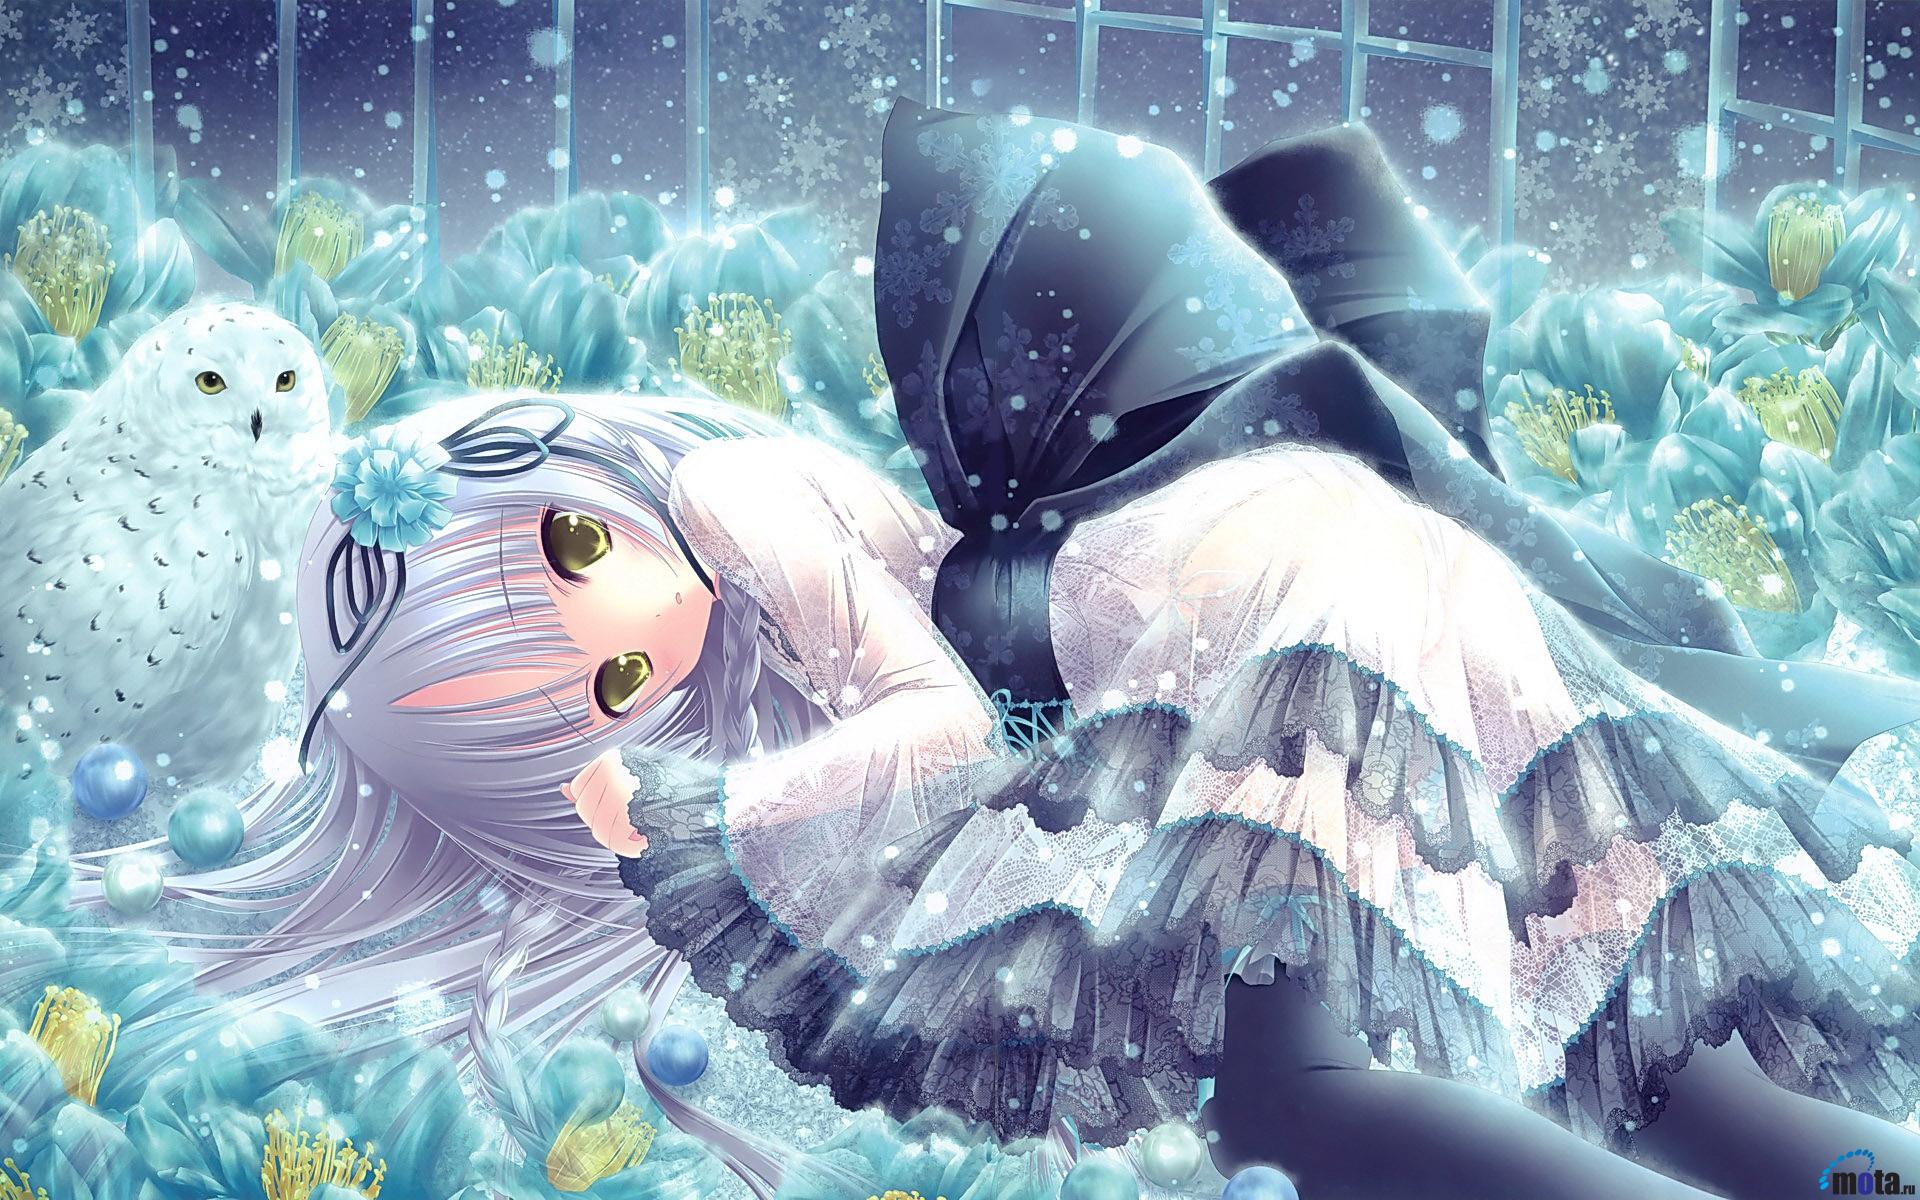 Snow Anime Wallpaper. Anime Wallpaper, Beautiful Anime Wallpaper and Awesome Anime Wallpaper